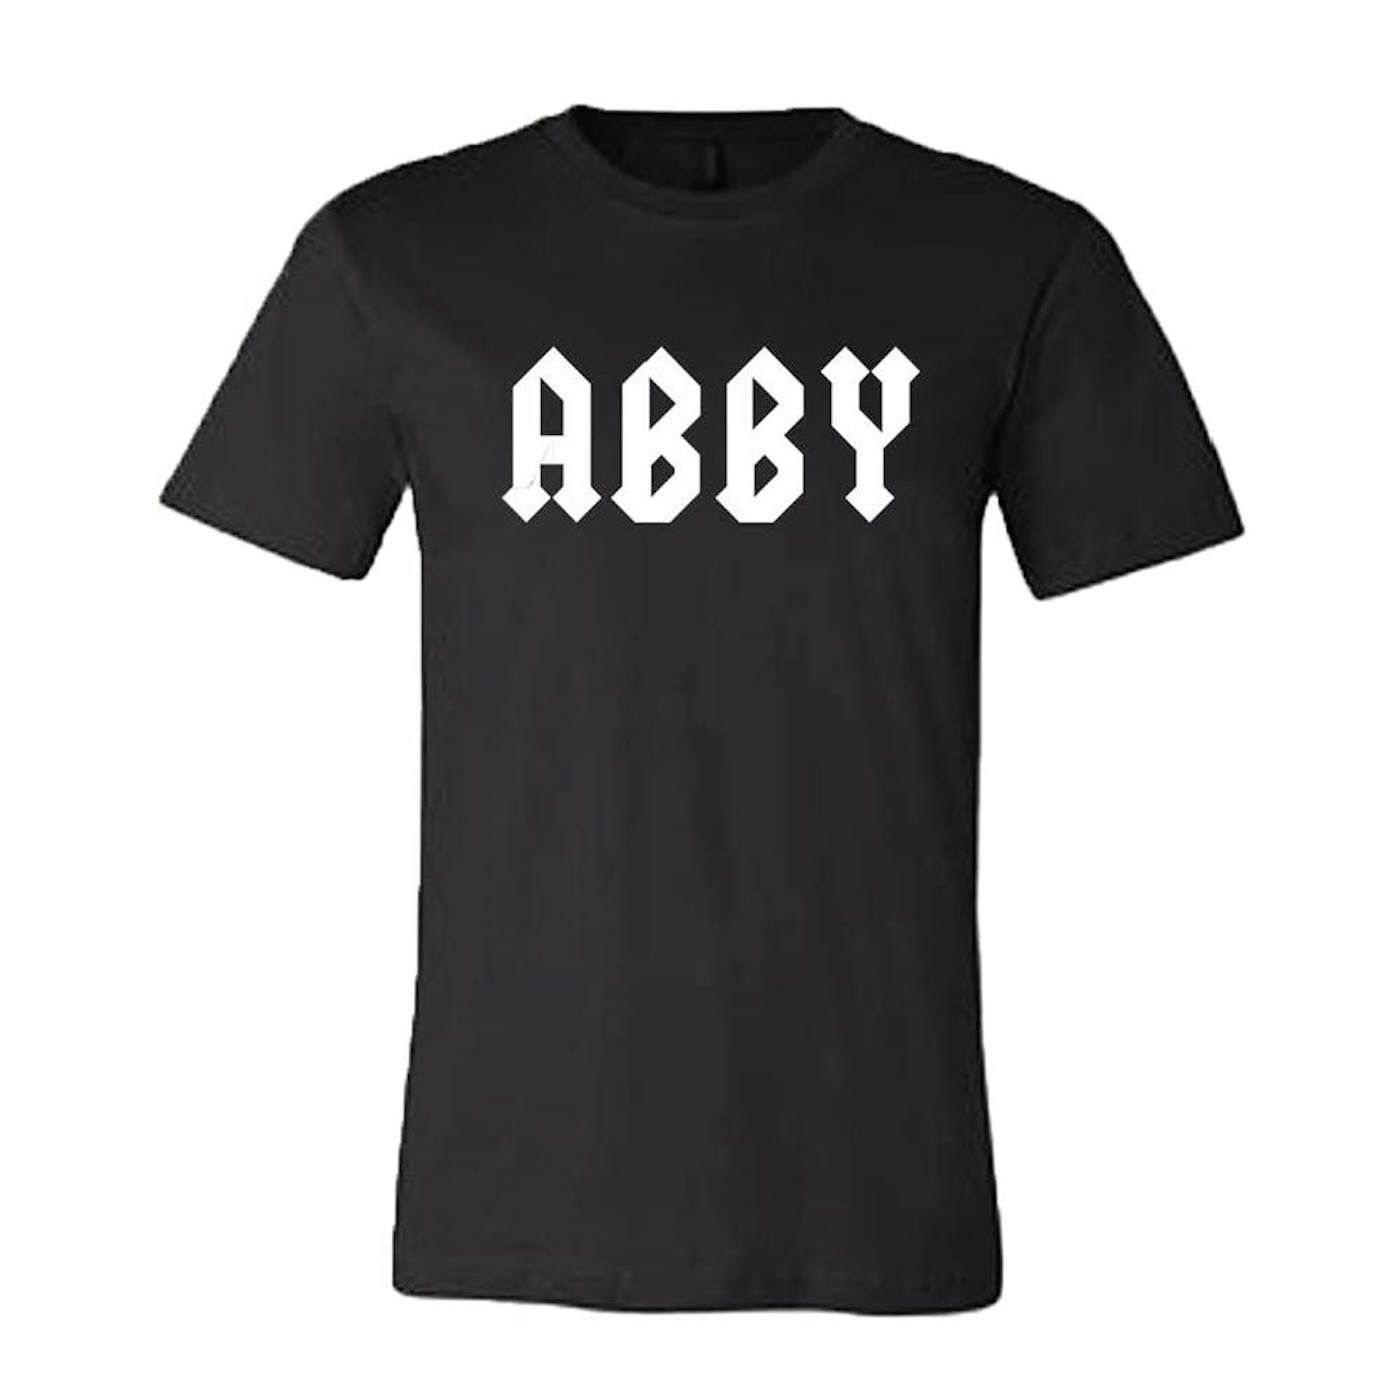 Travis Denning ABBY Black T-Shirt